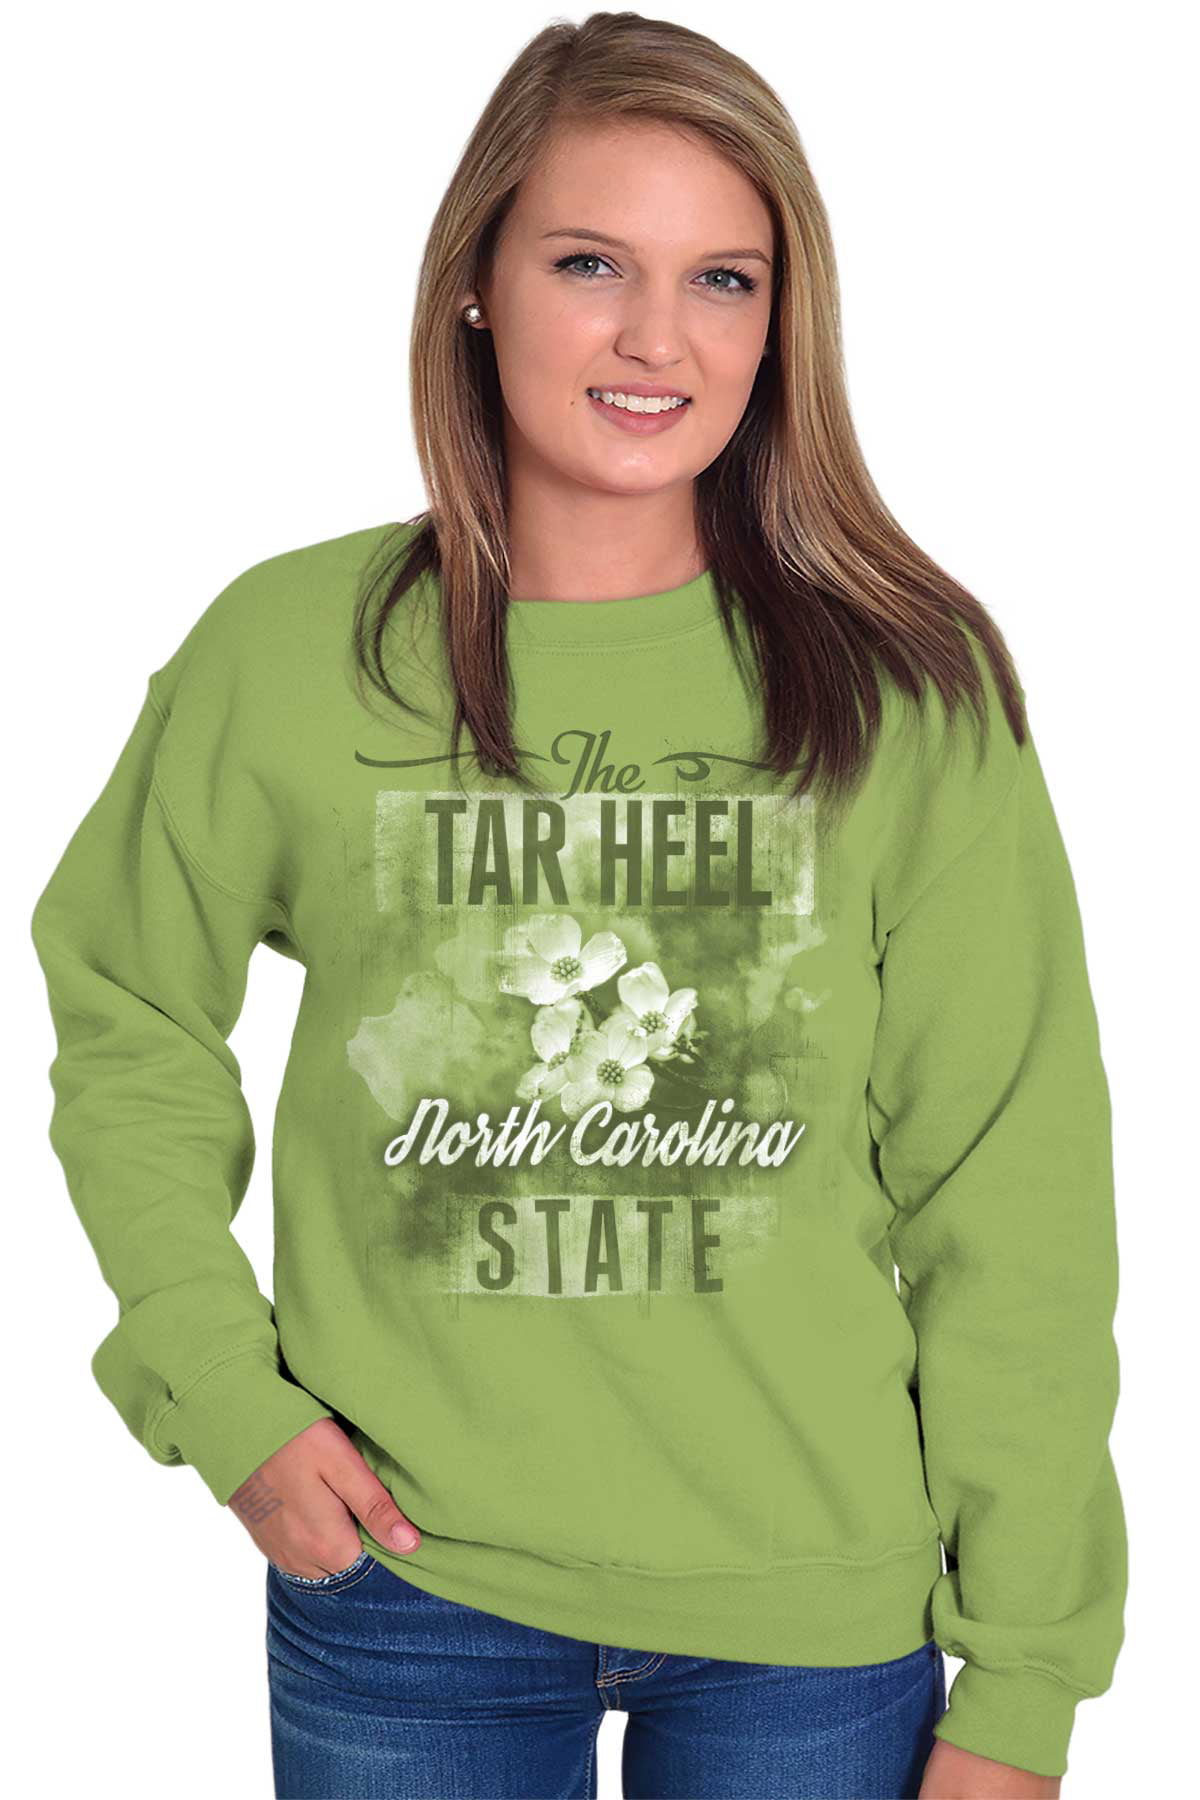 North Carolina Shirts NC Sweatshirt Sweatshirt Oversized Unisex Home State,Women,Comfortable and Soft,Winter Pullover,Fall Pullover